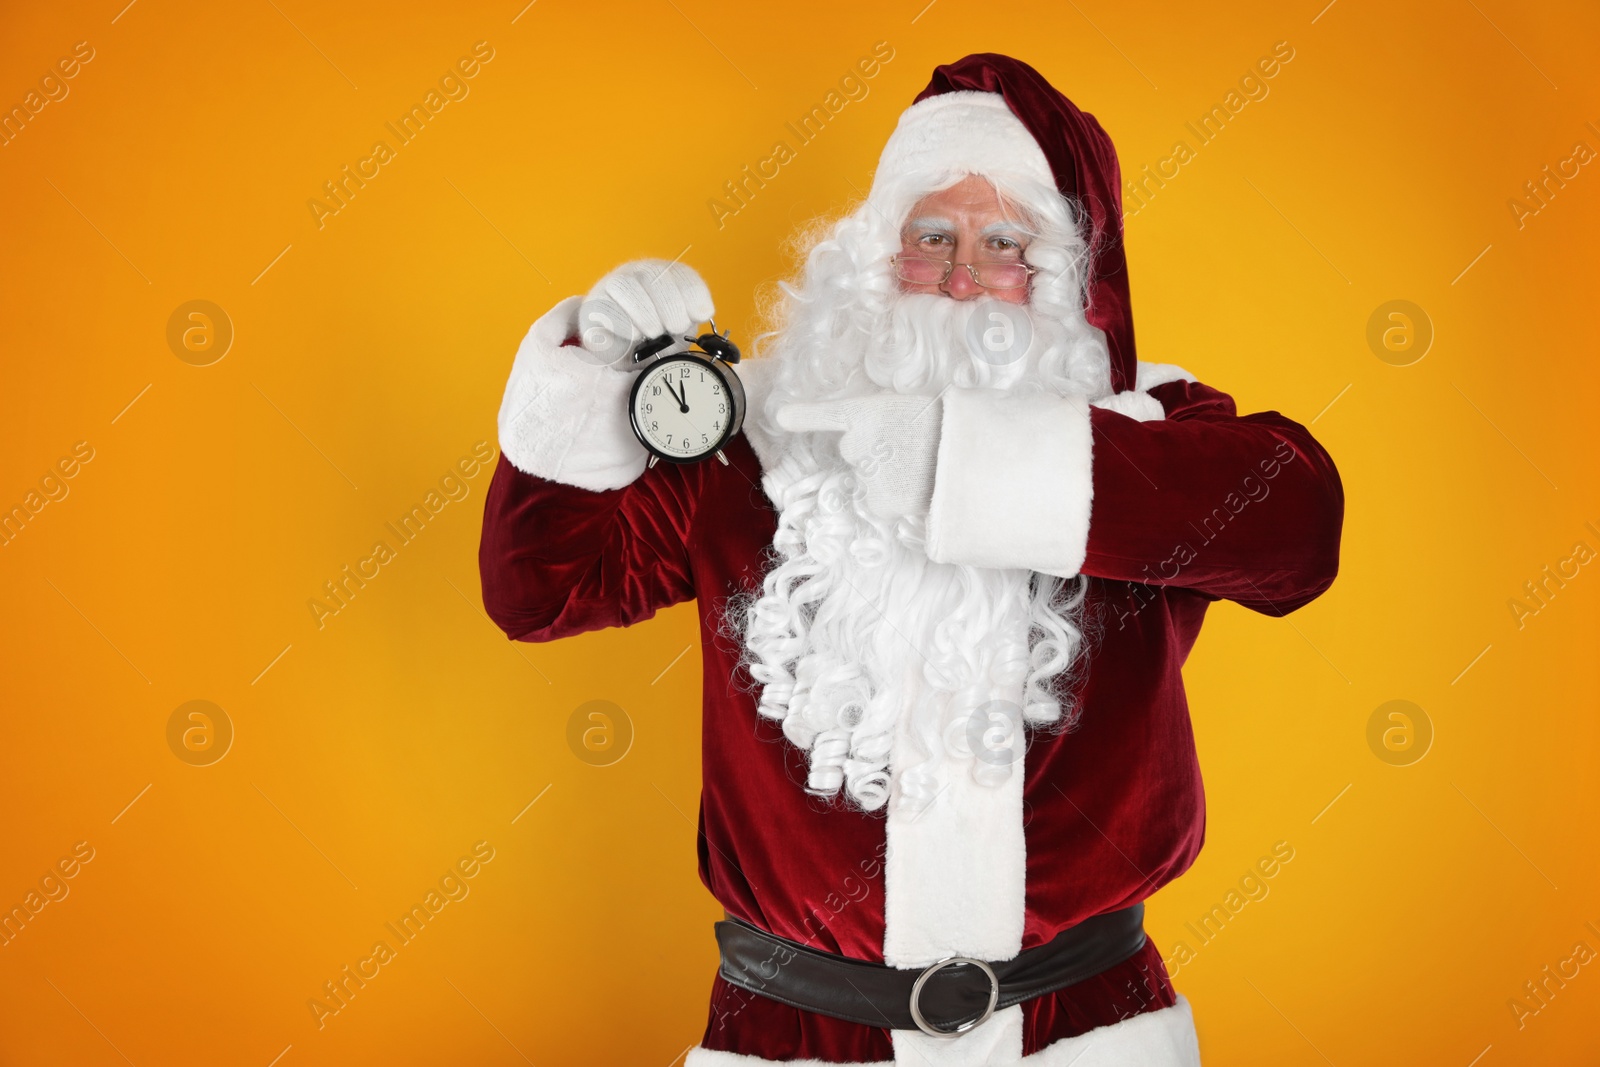 Photo of Santa Claus holding alarm clock on yellow background. Christmas countdown